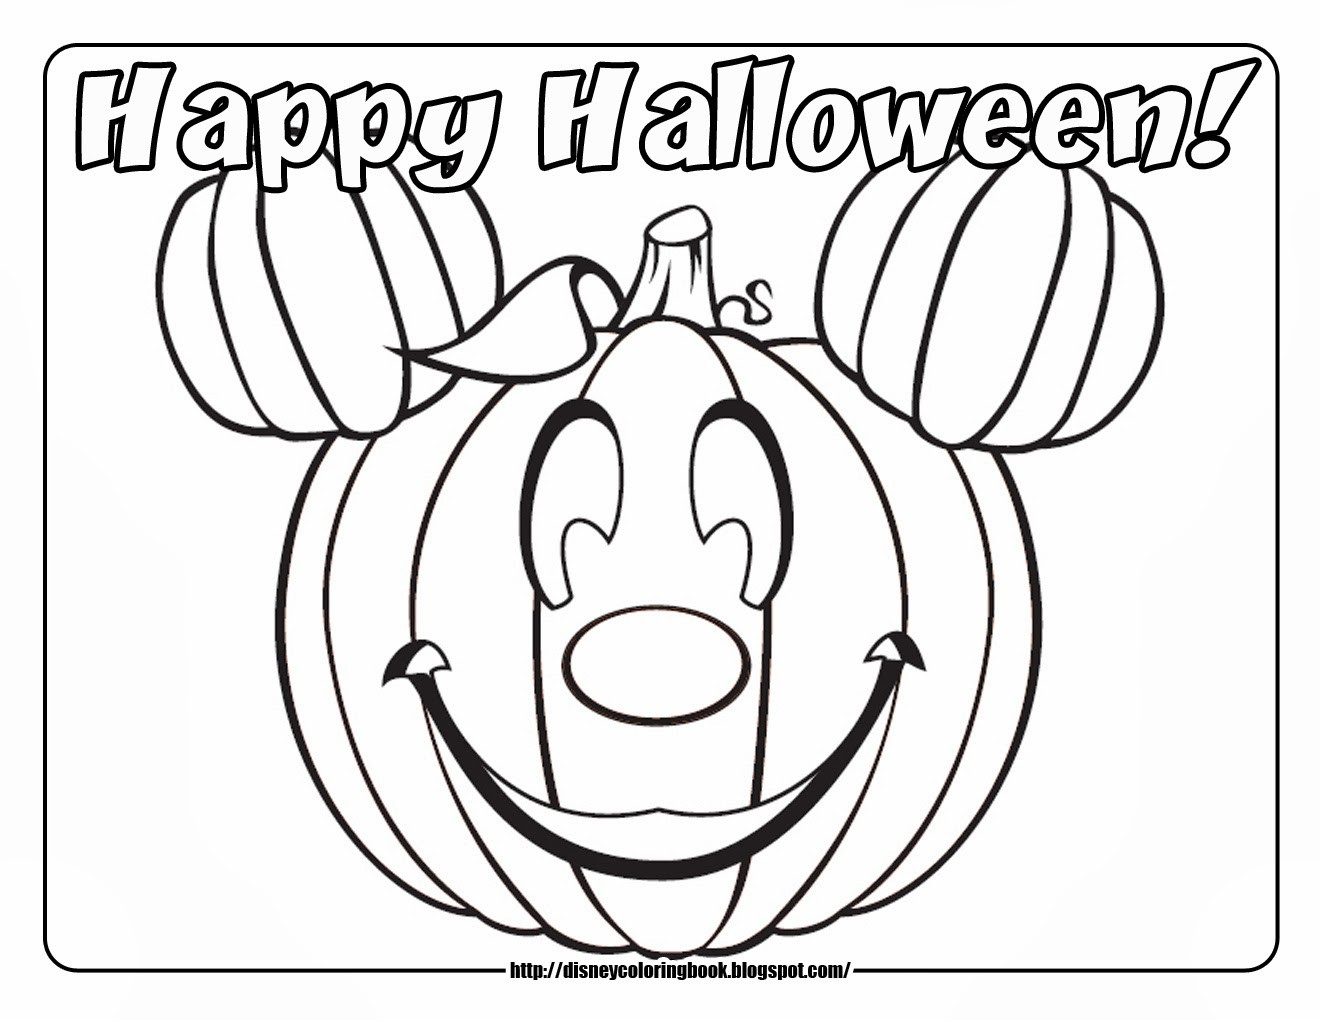 Best ideas about Halloween Printable Coloring Pages
. Save or Pin Halloween Coloring Pages – Free Printable Minnesota Miranda Now.